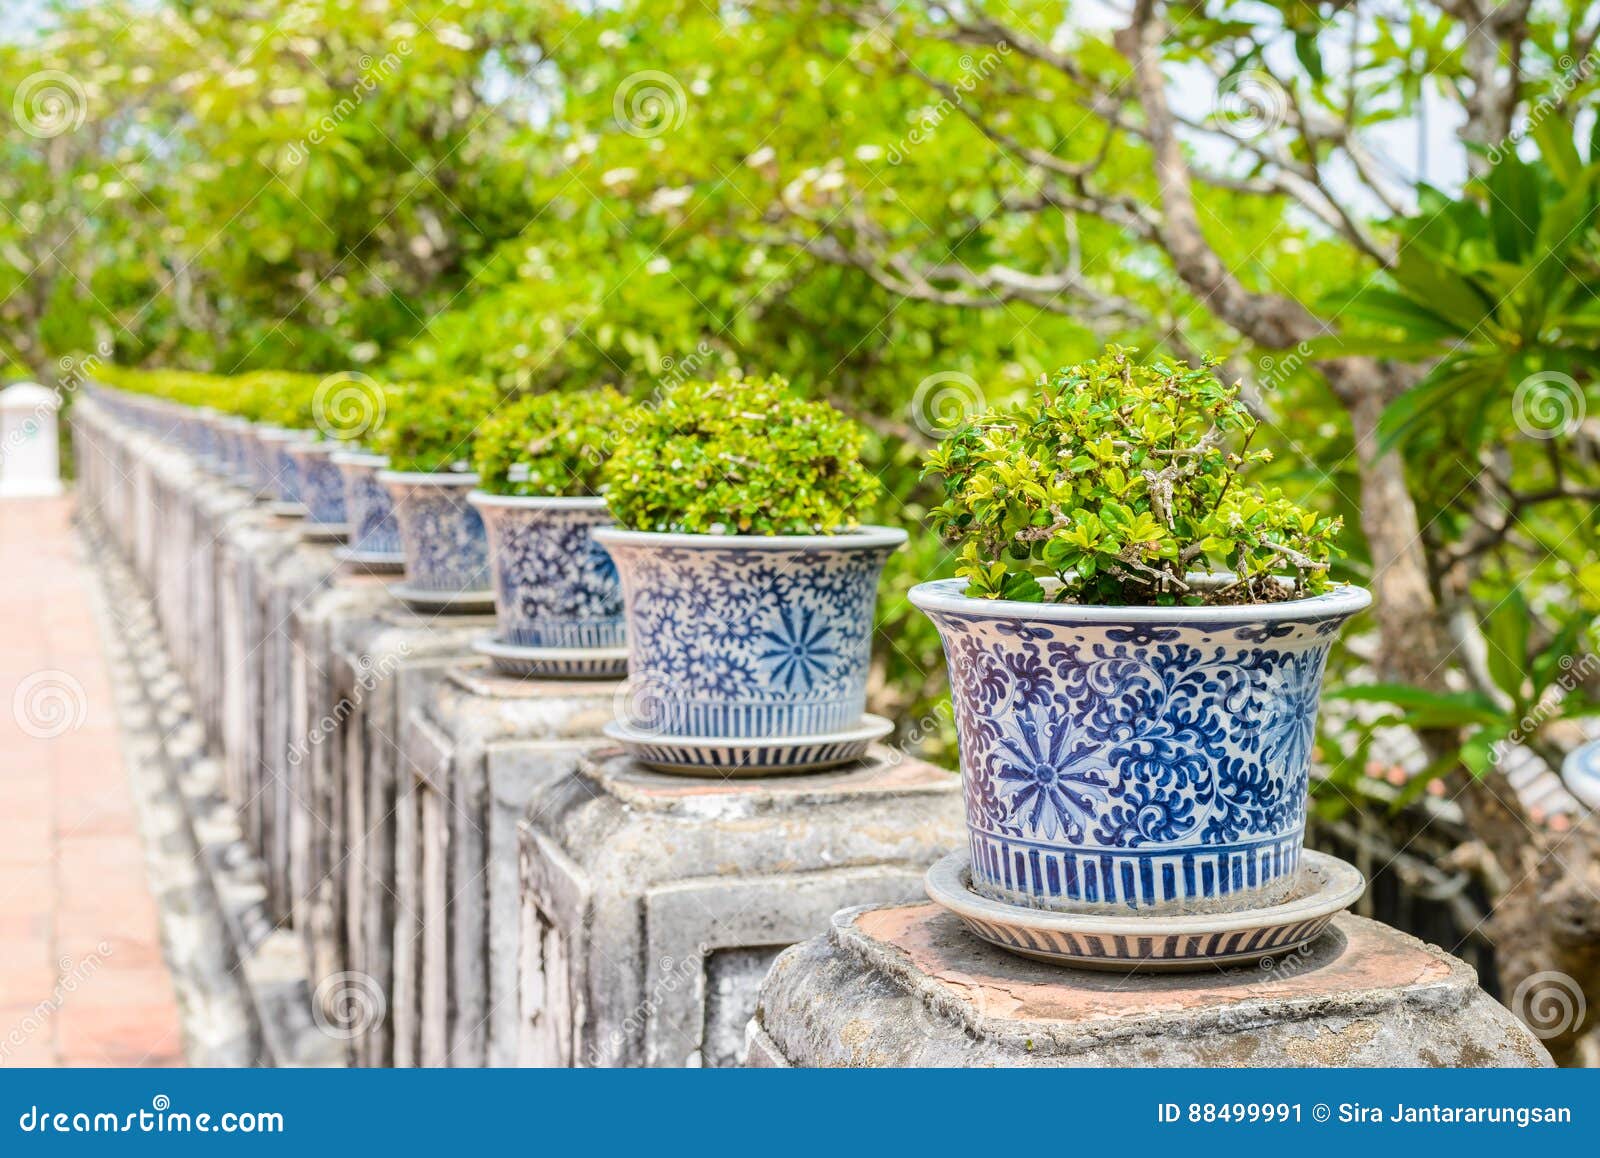 Bonsai,Siamese rough bush in the porcelain pots